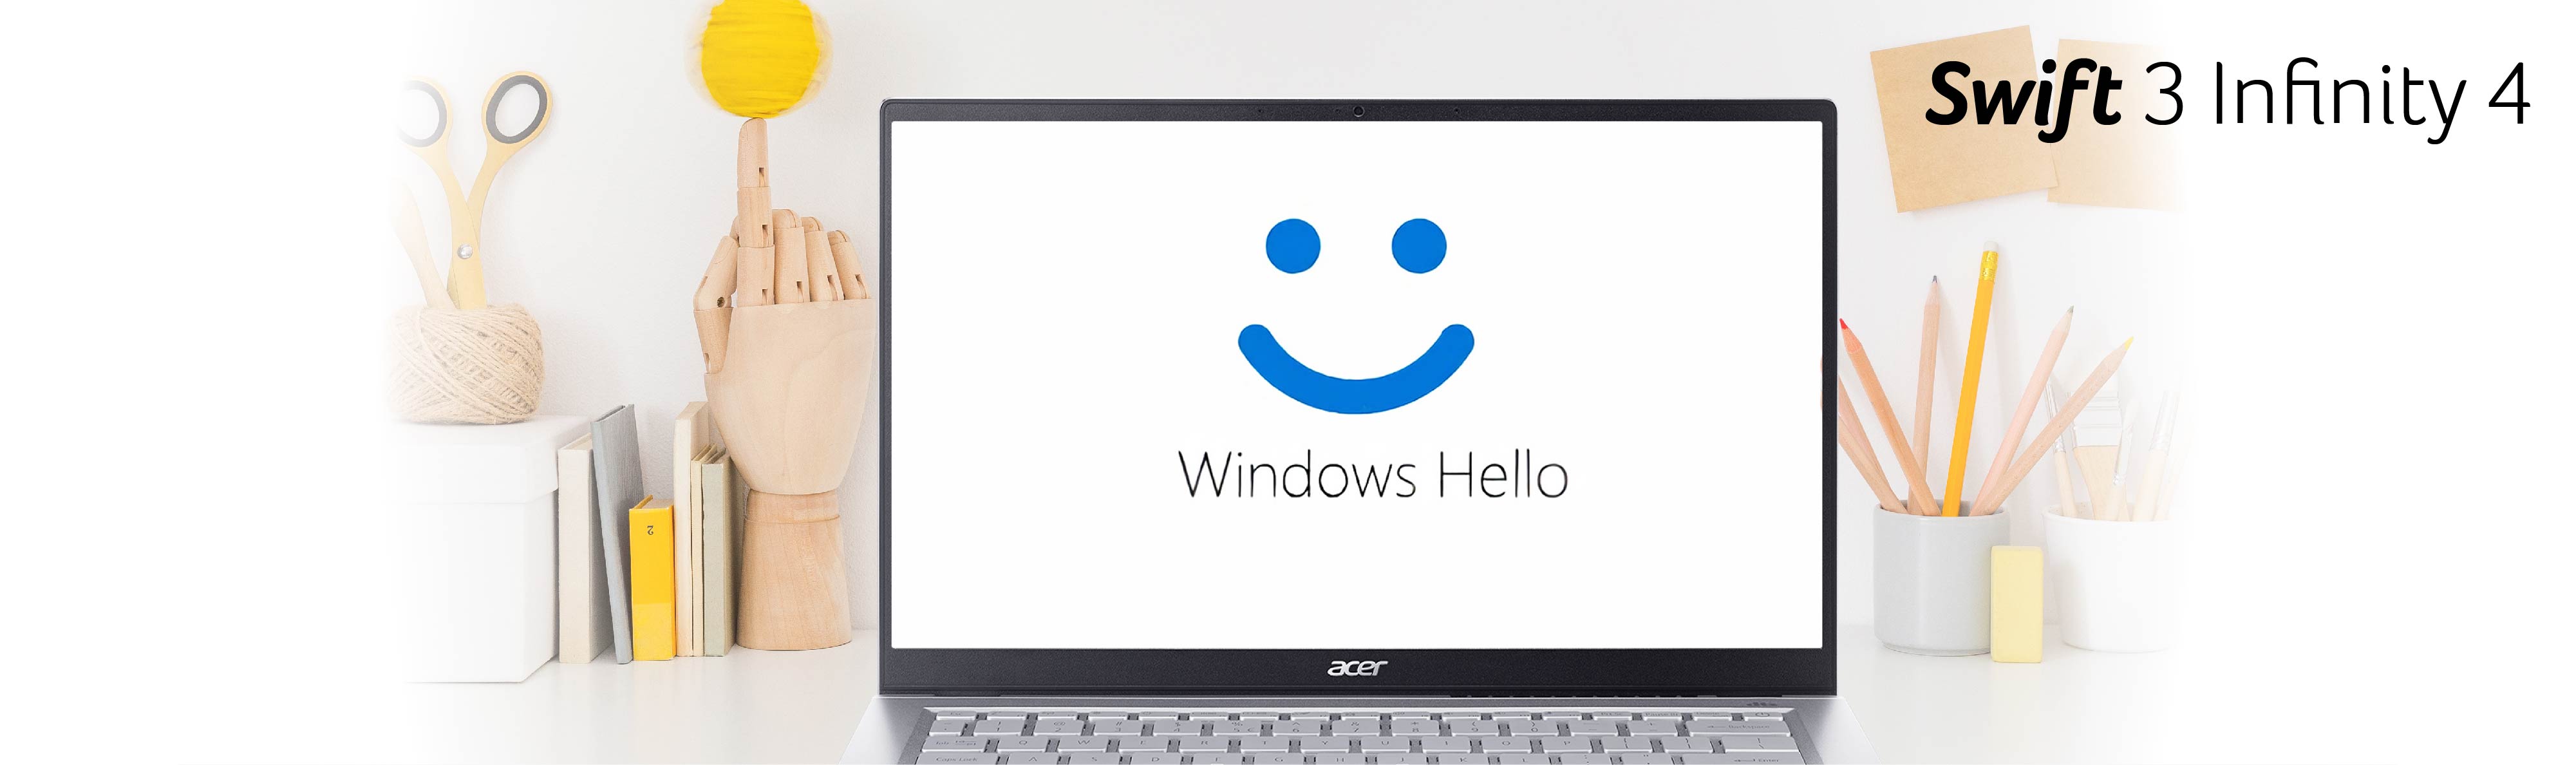 Apa itu Windows Hello? Bagaimana Cara Mengaktifkannya di Laptop?